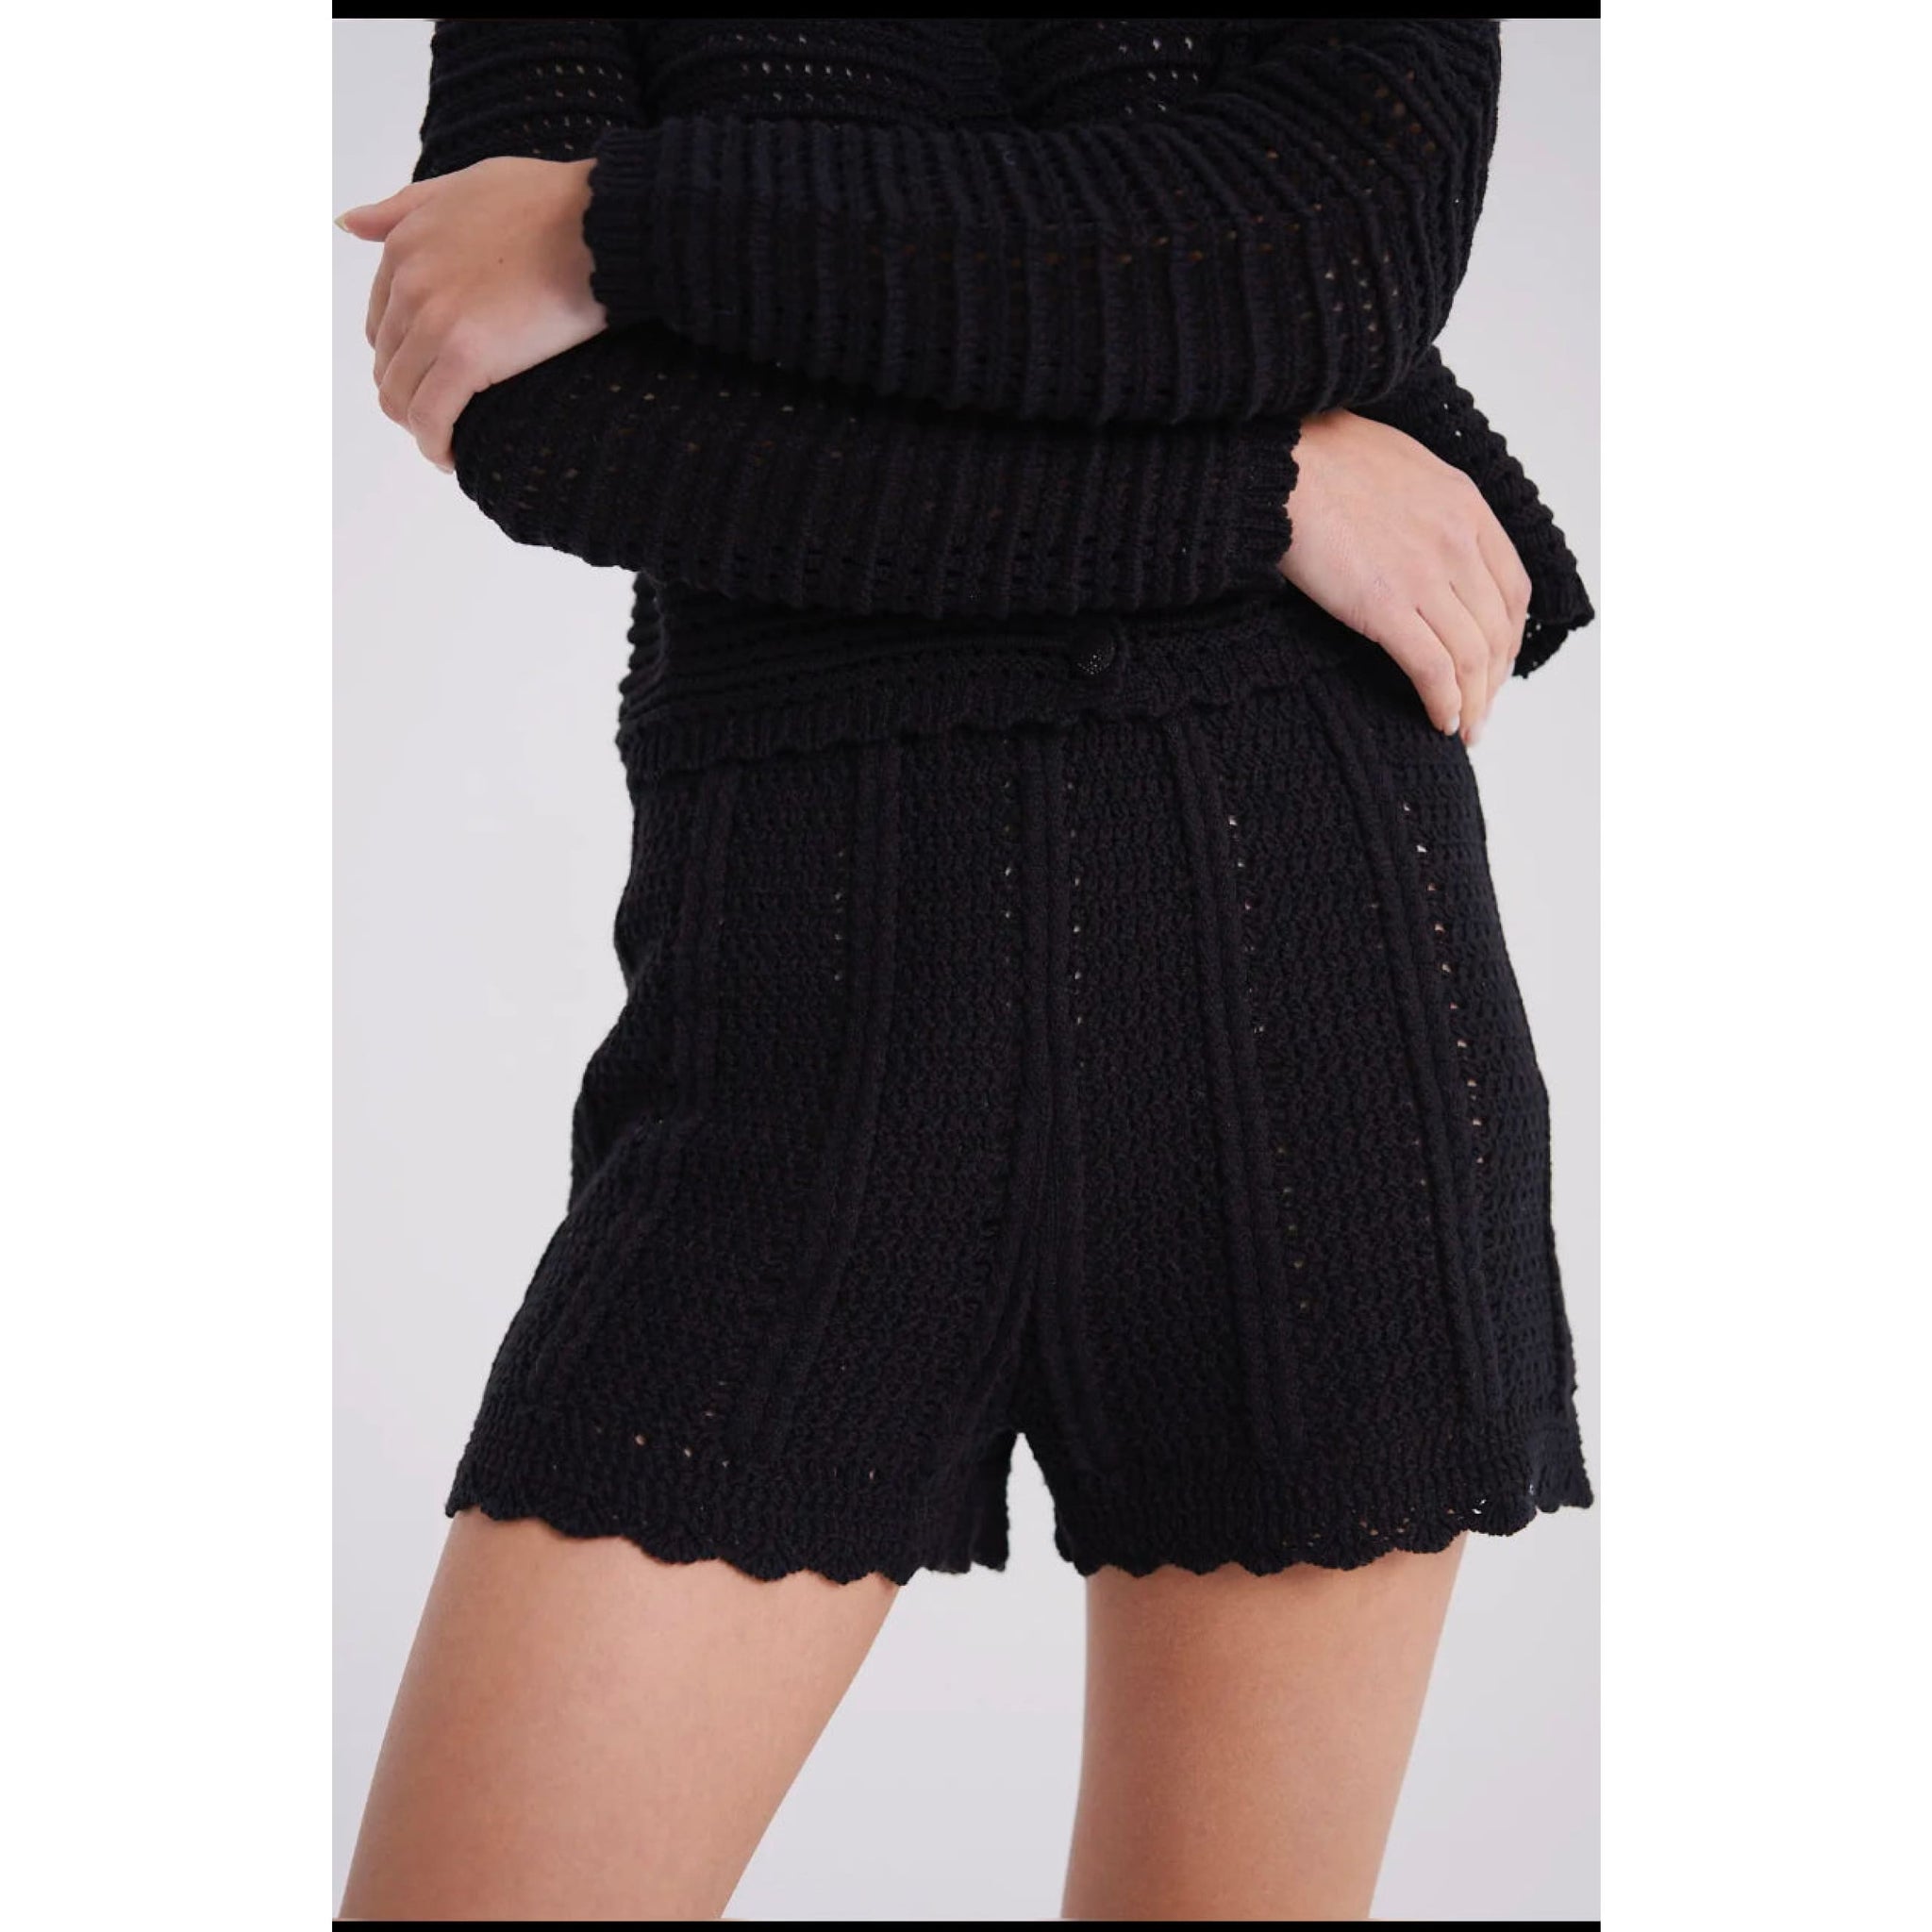 Clever Alice Black Crochet Shorts - Bottoms